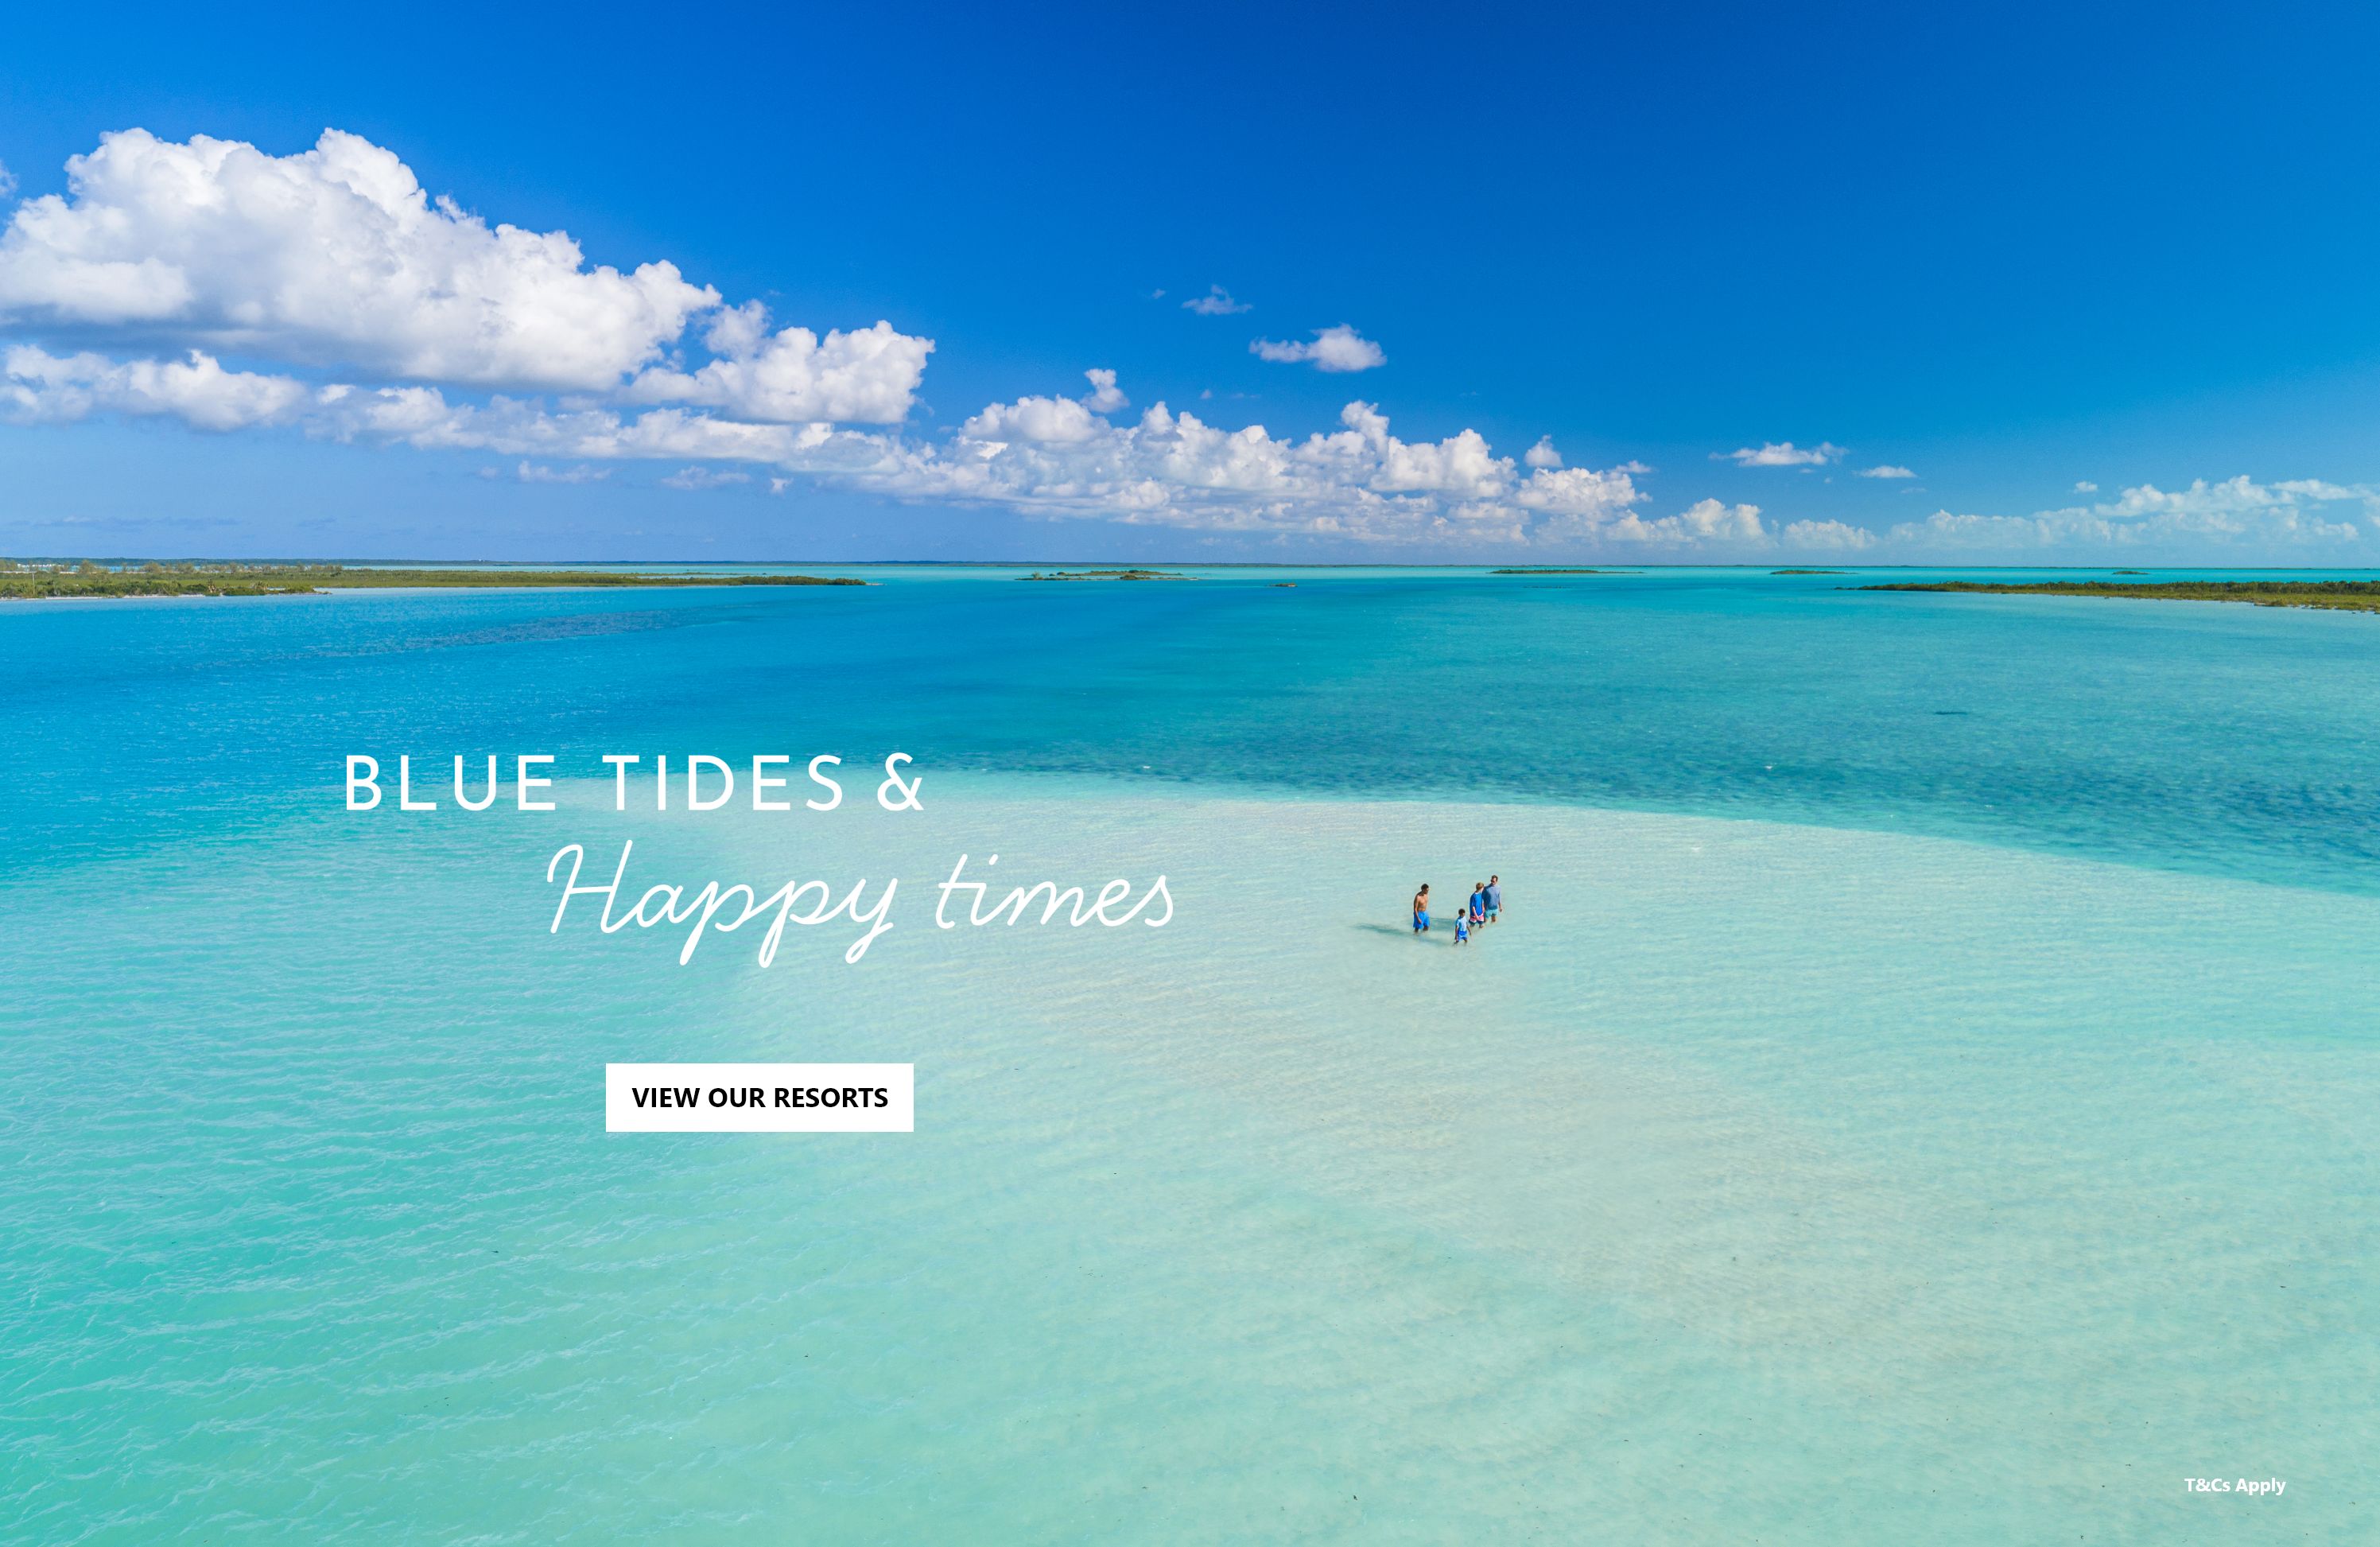 Blue Tides & Happy Times